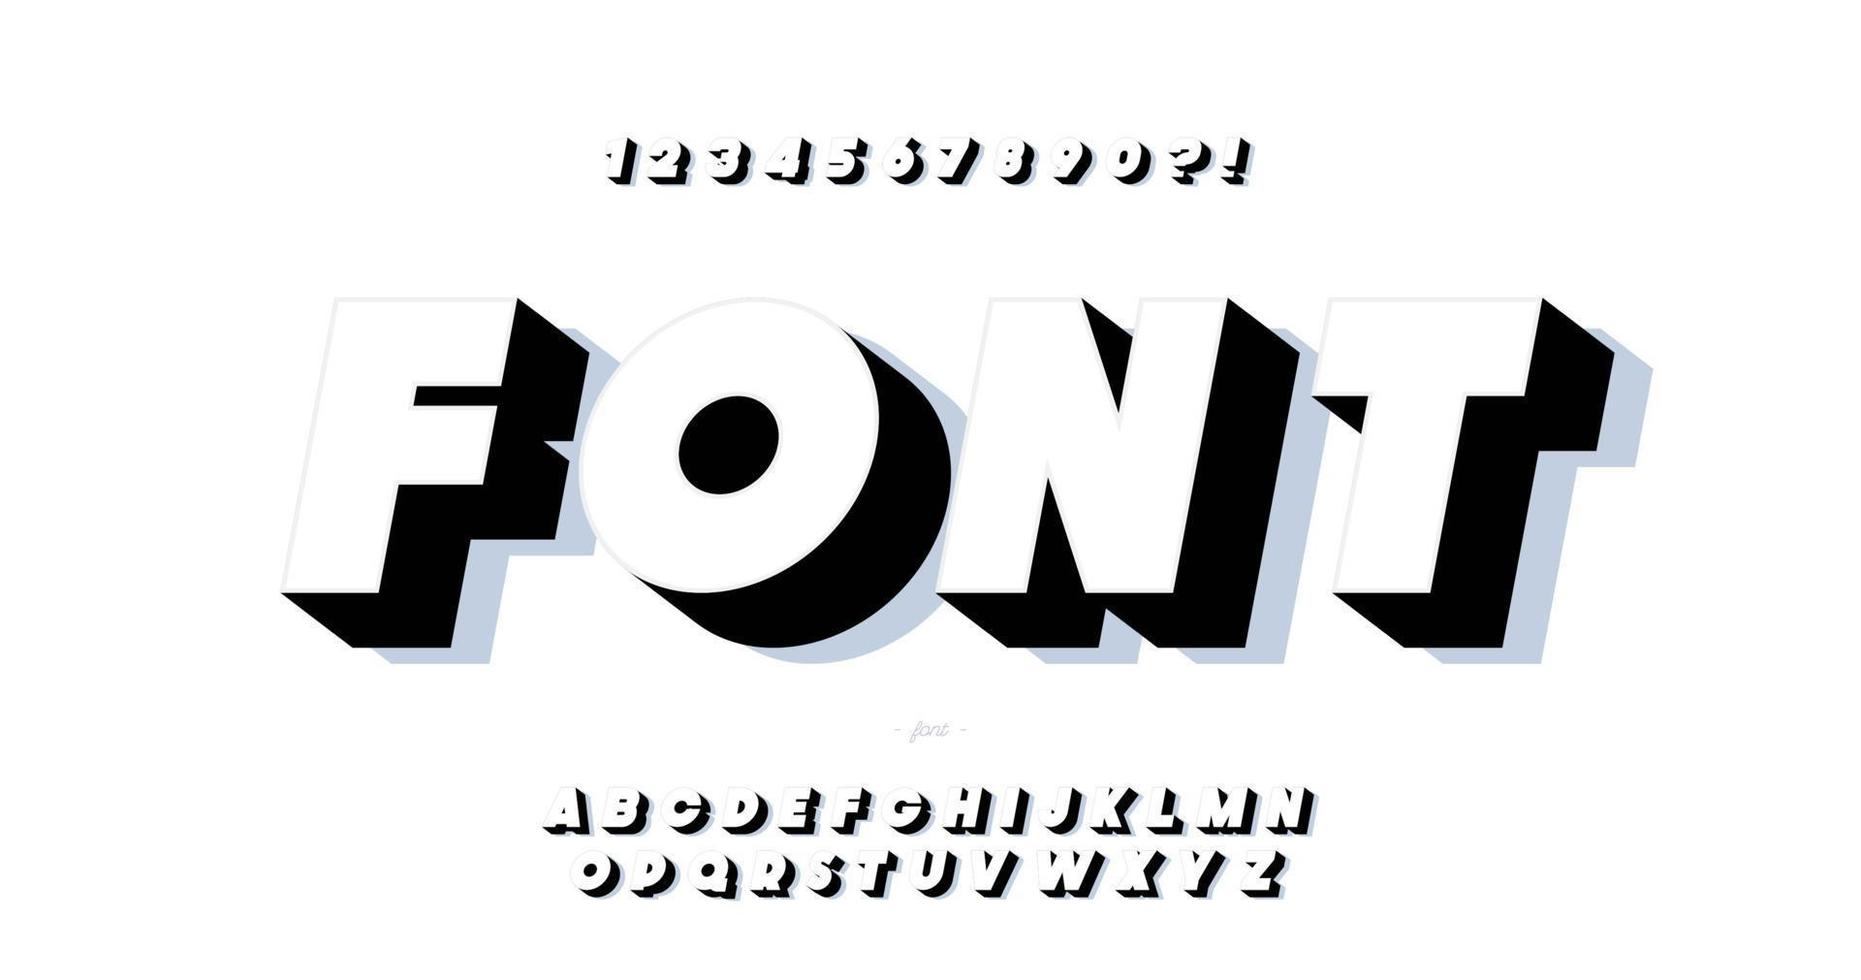 carattere vettoriale tipografia moderna in stile audace 3d